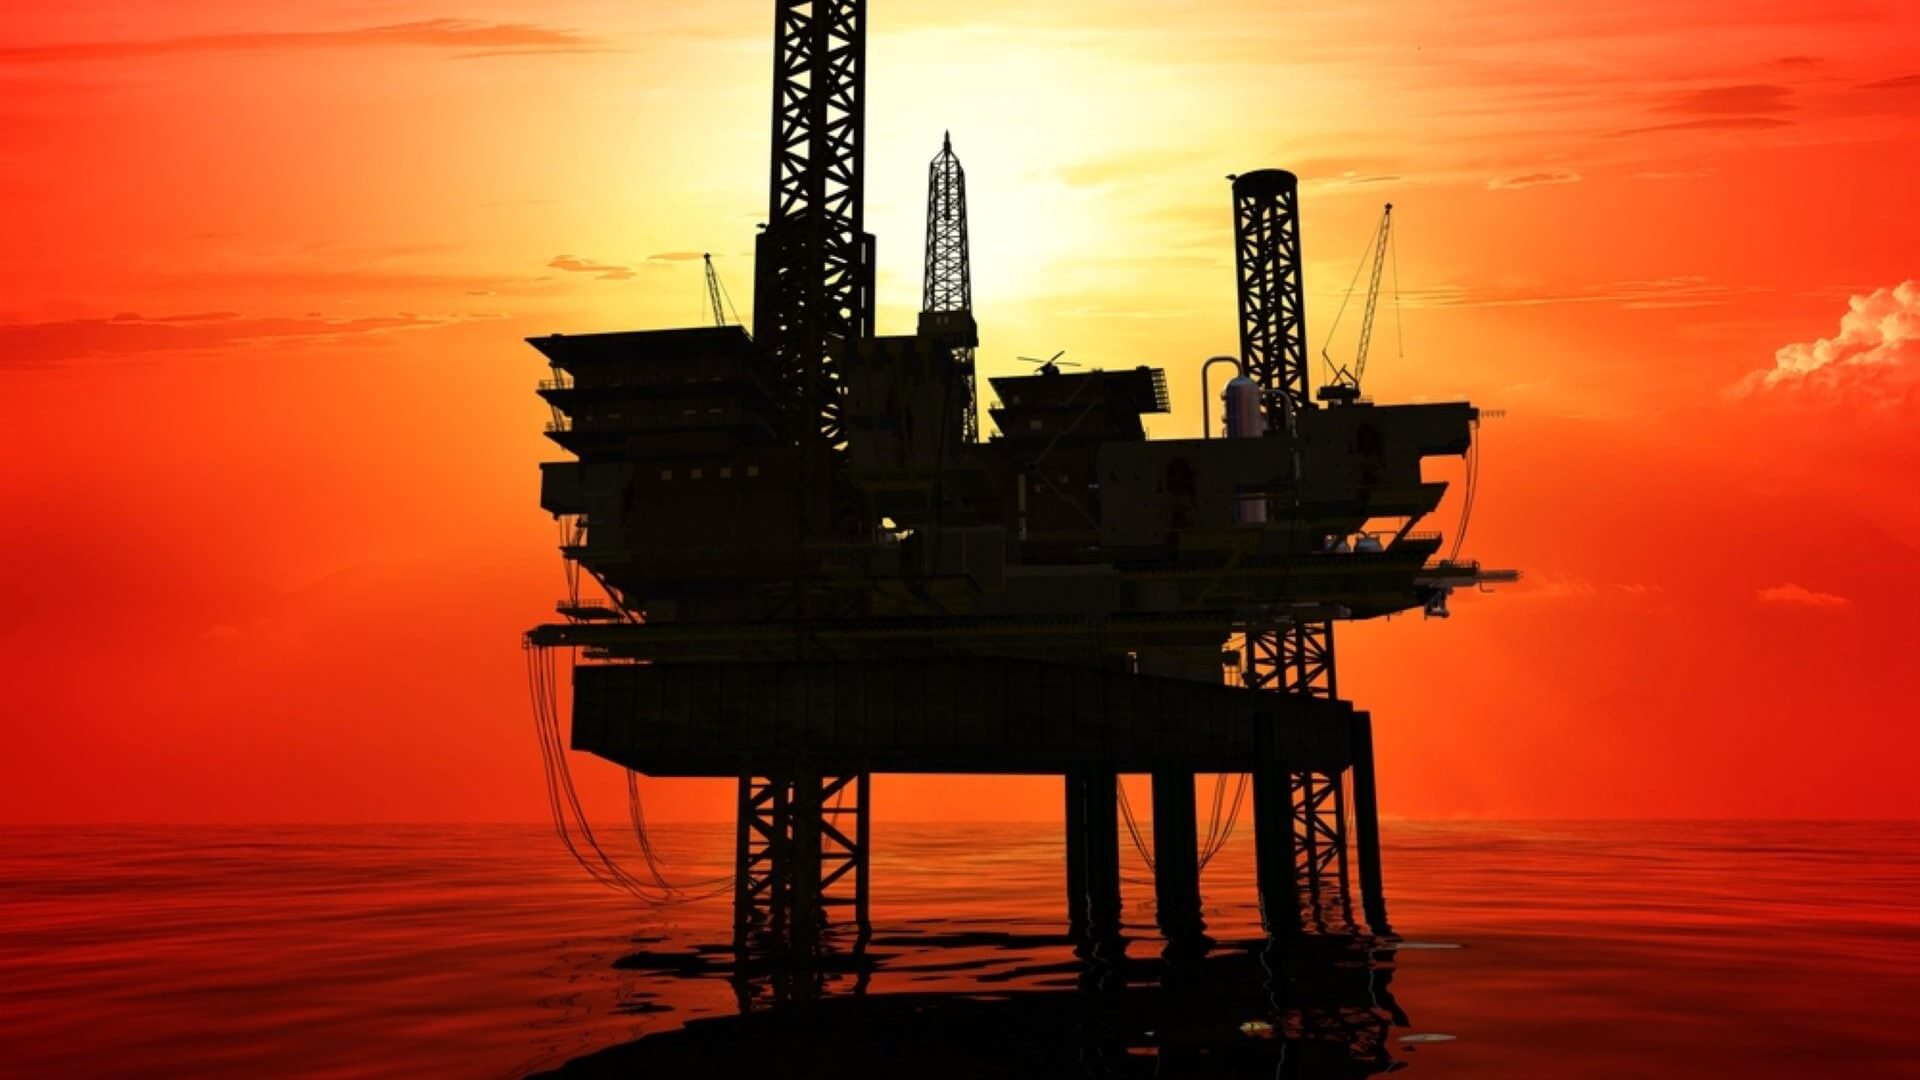 Oil rig silhouette set against orange sunset